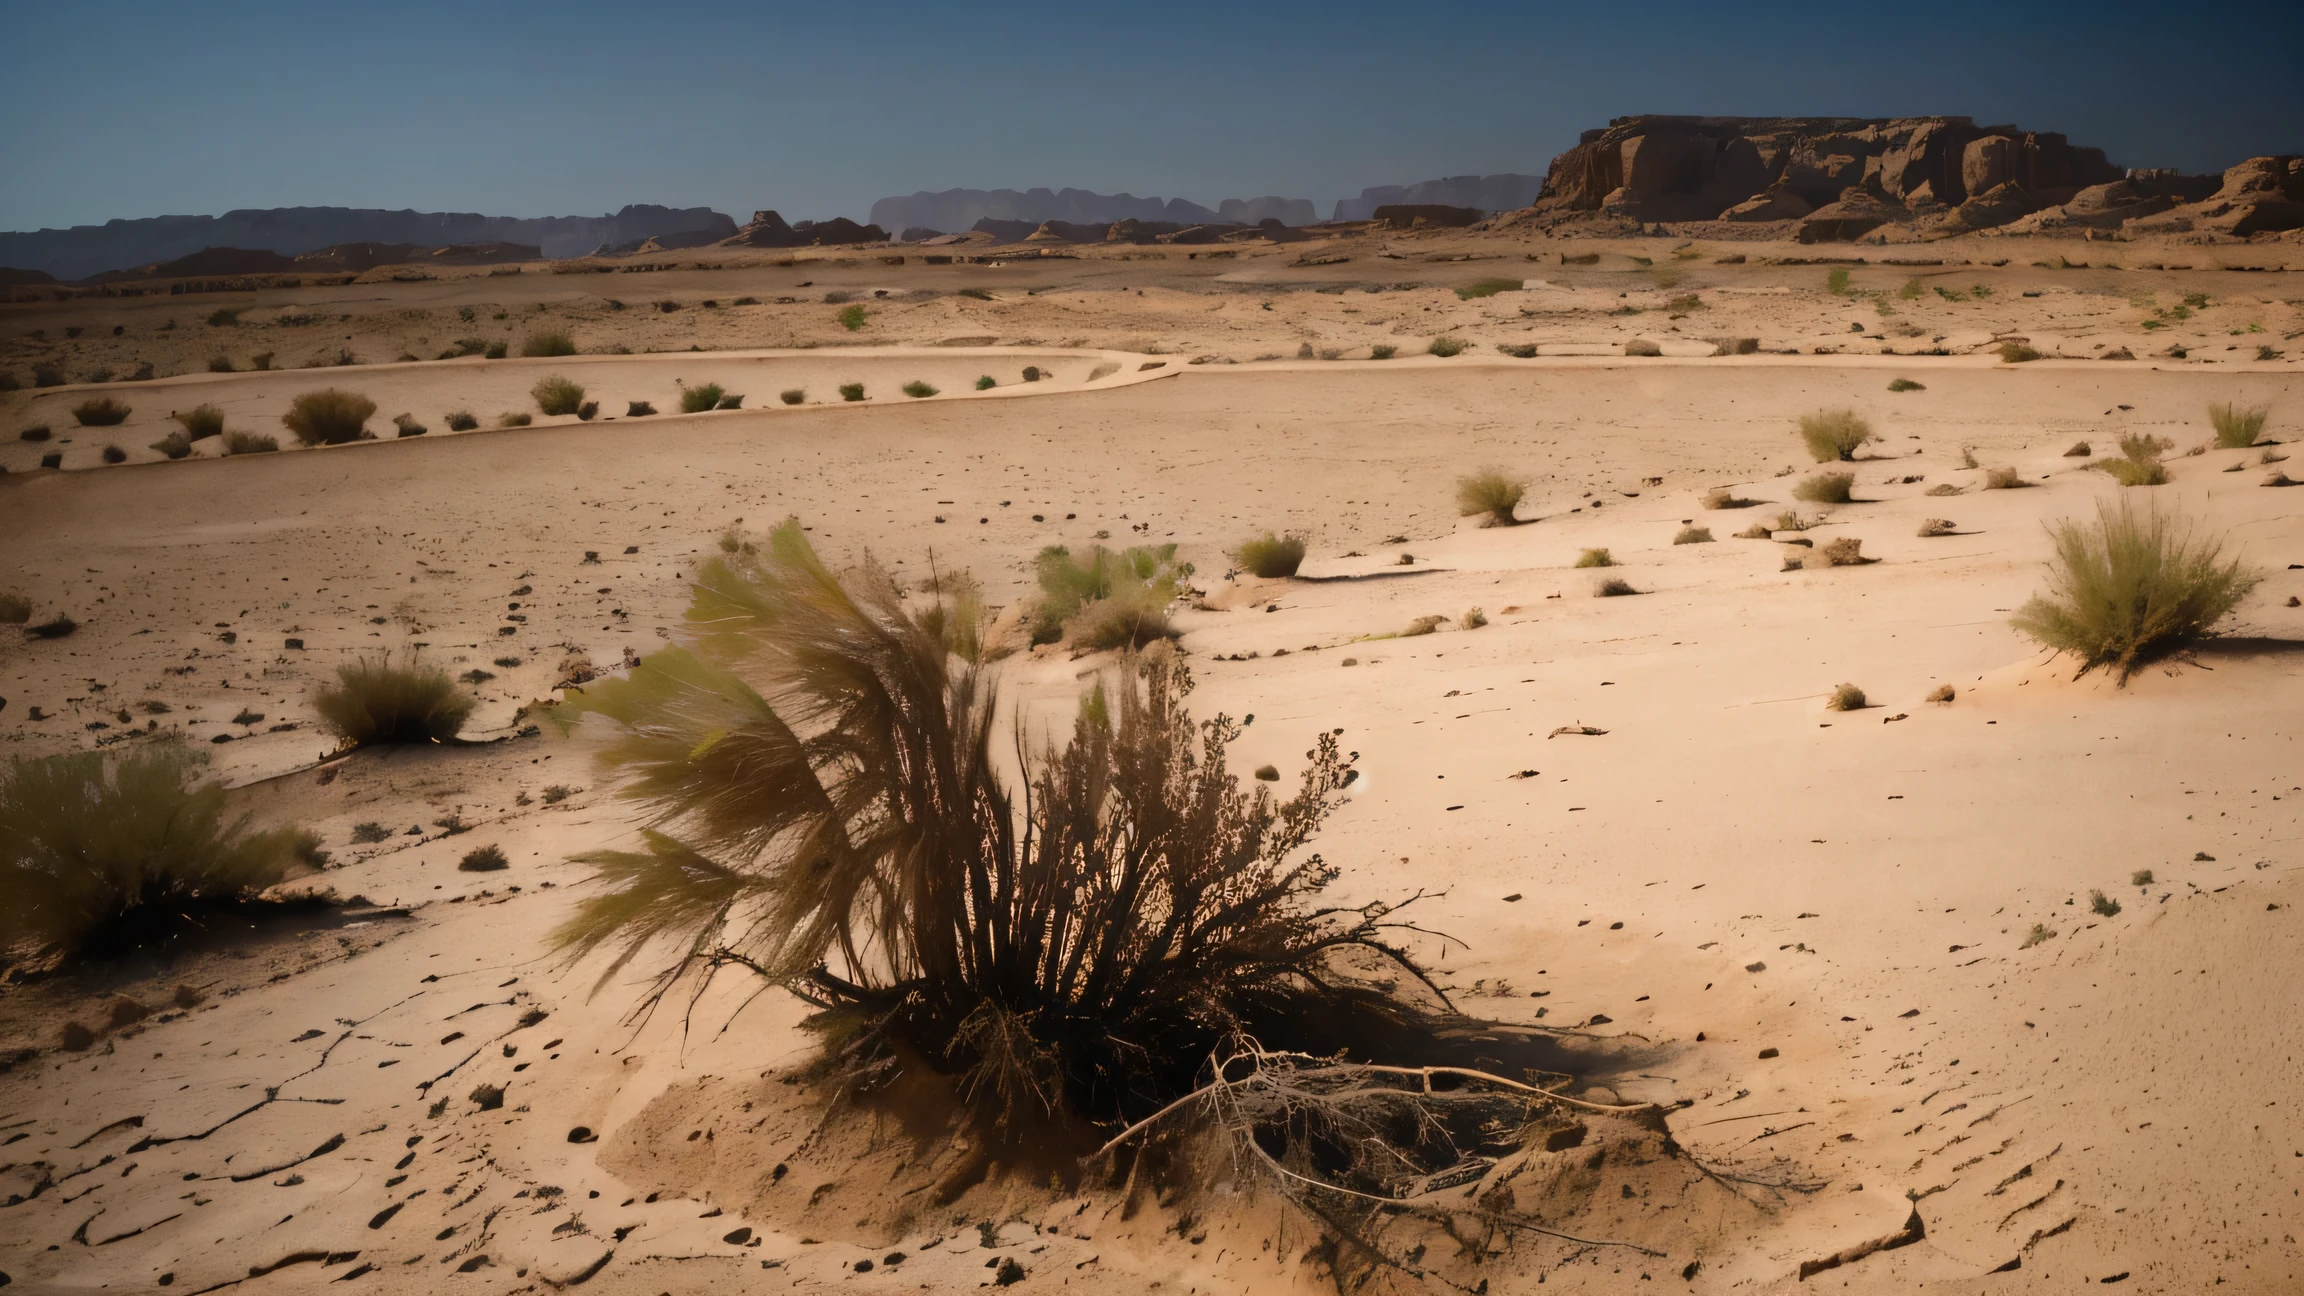 photo of dry desolate oasis in the sandy desert, Jenoptik JD 3.1 exclusive, High Contrast, 1ms shutter speed, Hard Lighting